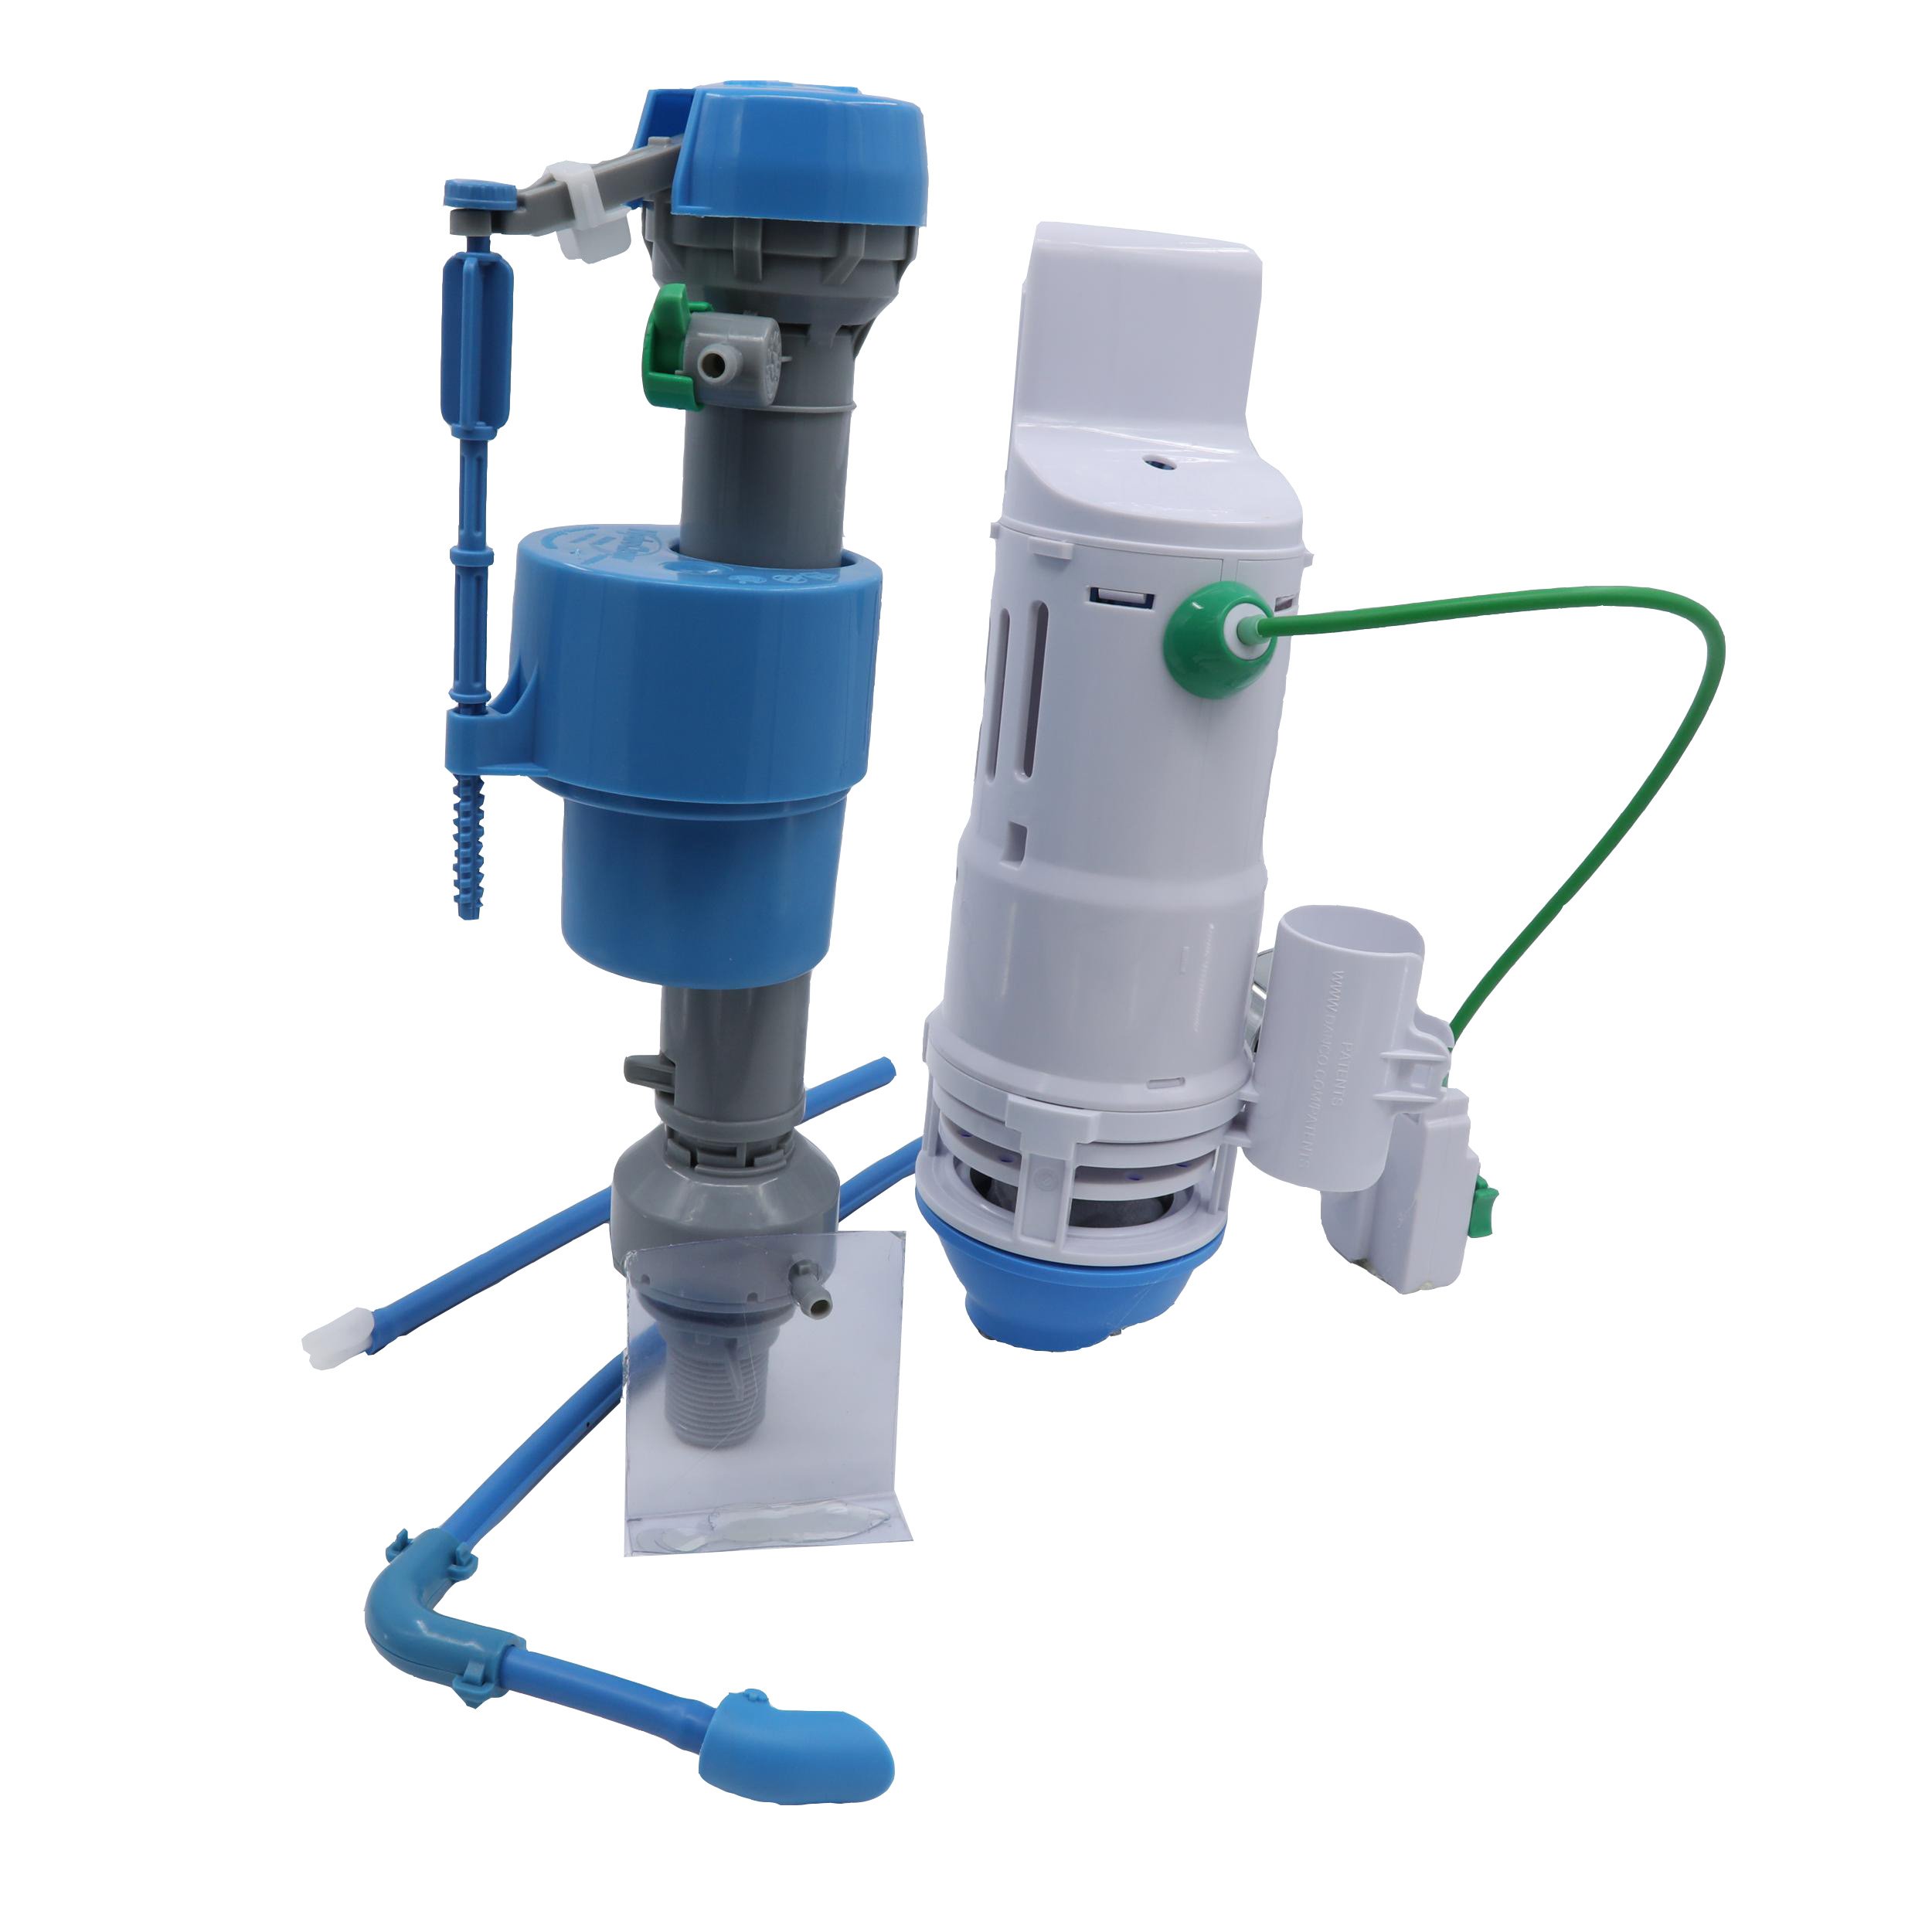 HYR460 Water-Saving Toilet Total Repair Kit with Dual Flush Valve 